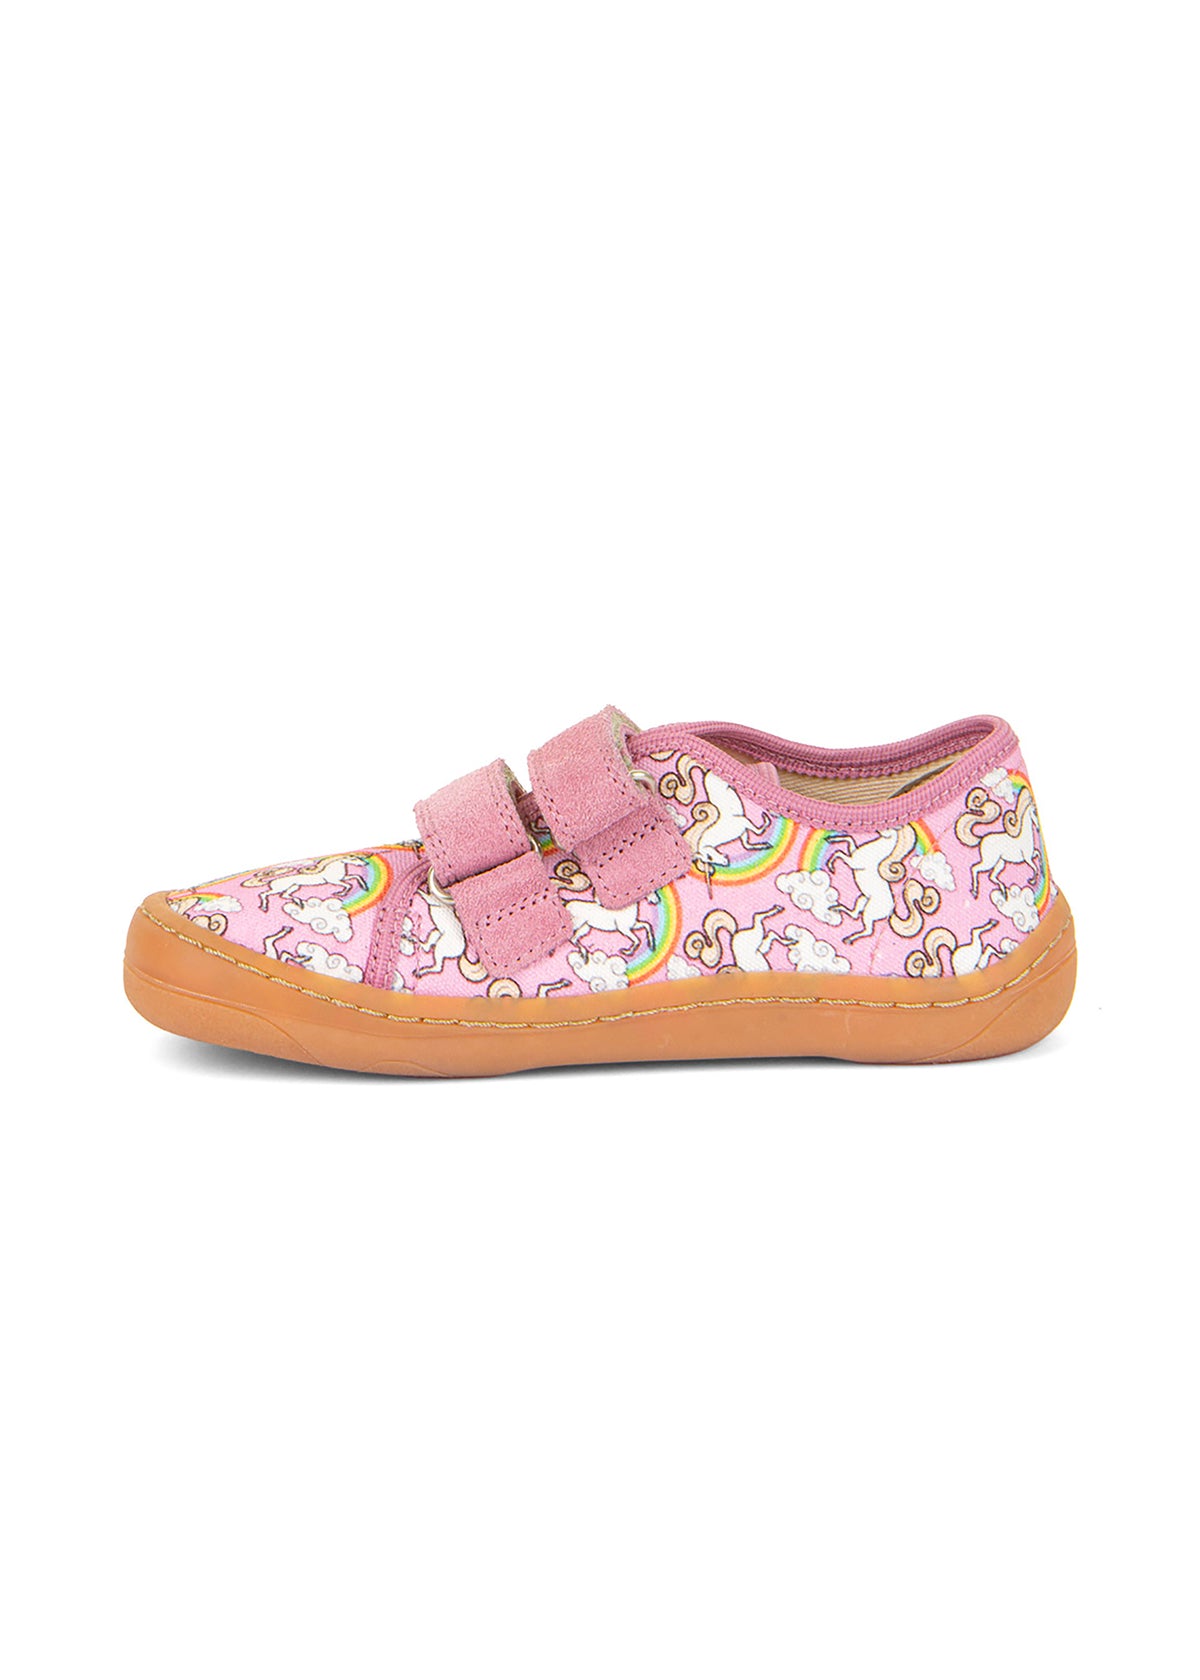 Children's barefoot sneakers - pink, unicorn